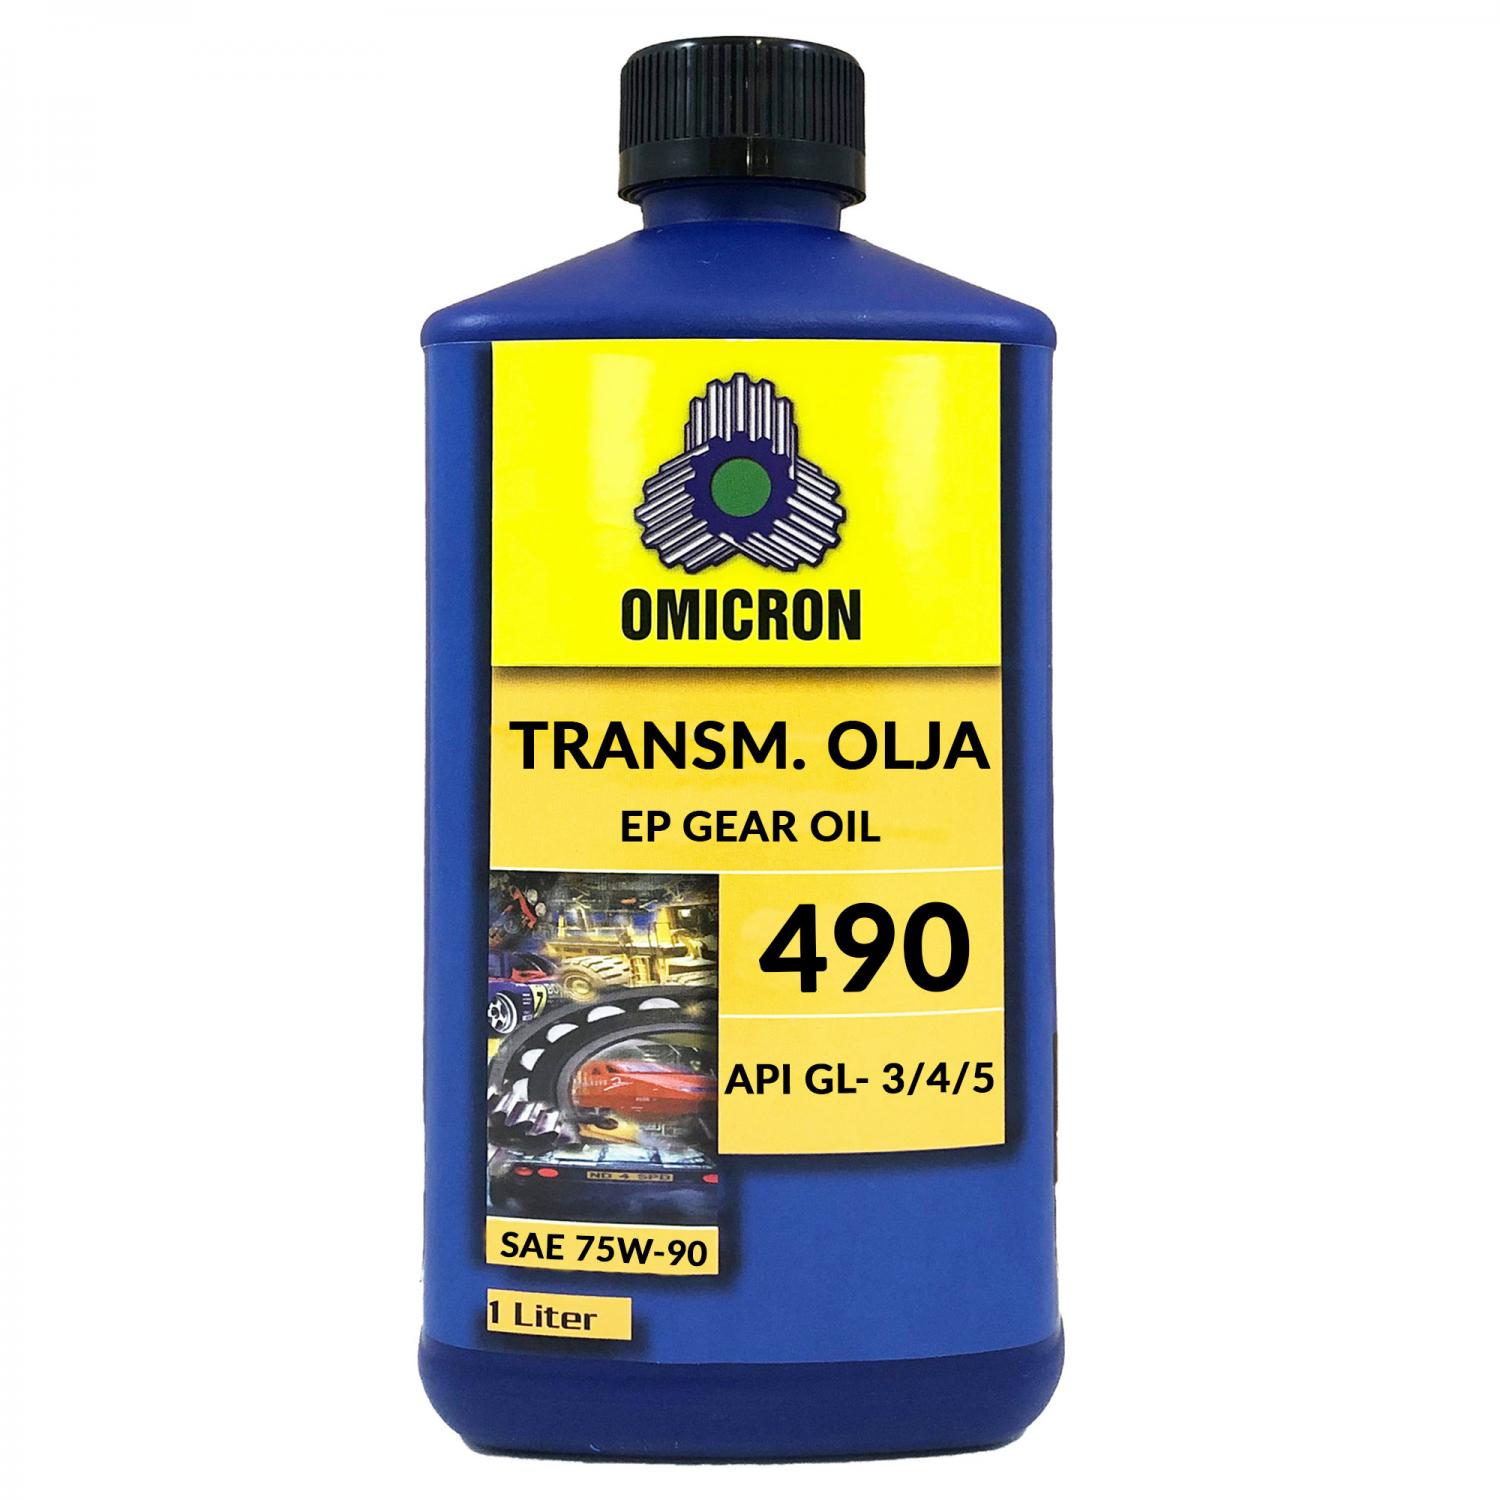 Omicron 490 SAE 75W-90 Transmissionsolja API GL...